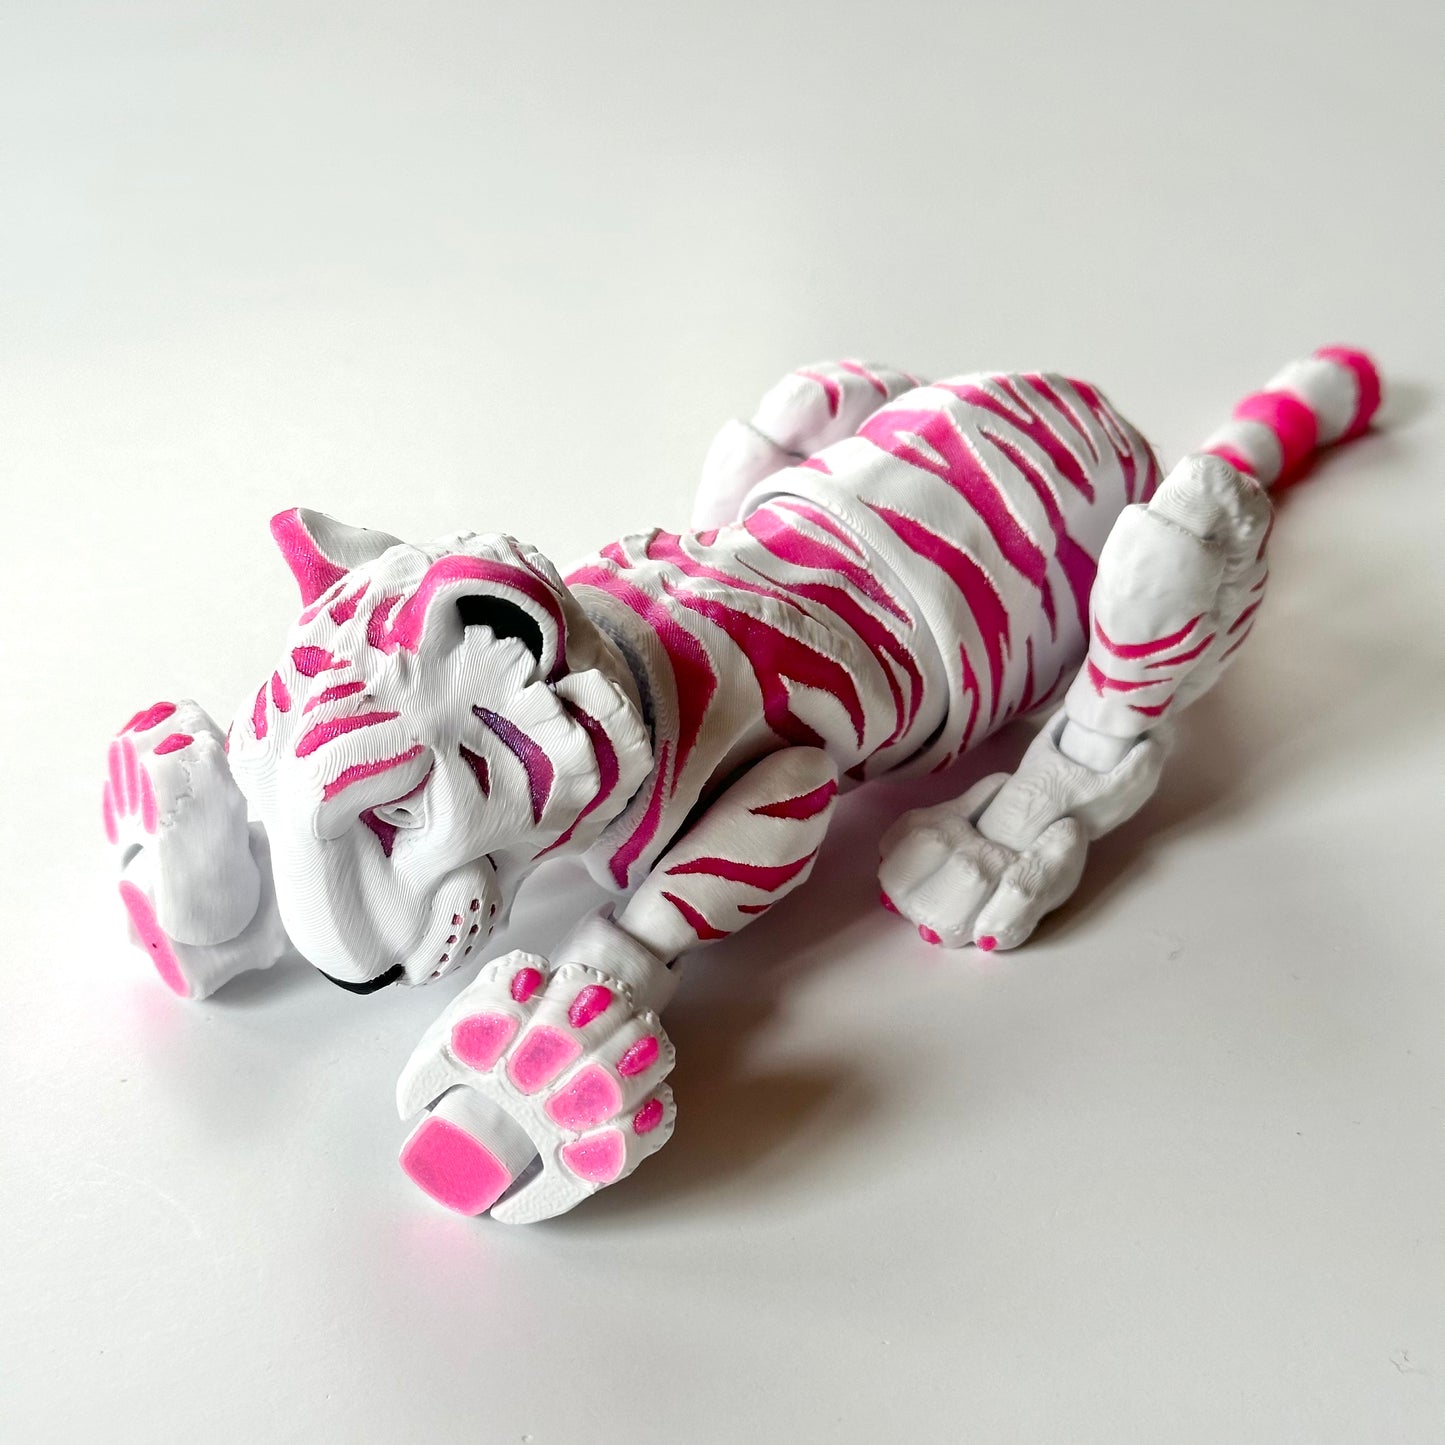 Tiger - 3D Printed Articulating Figurine